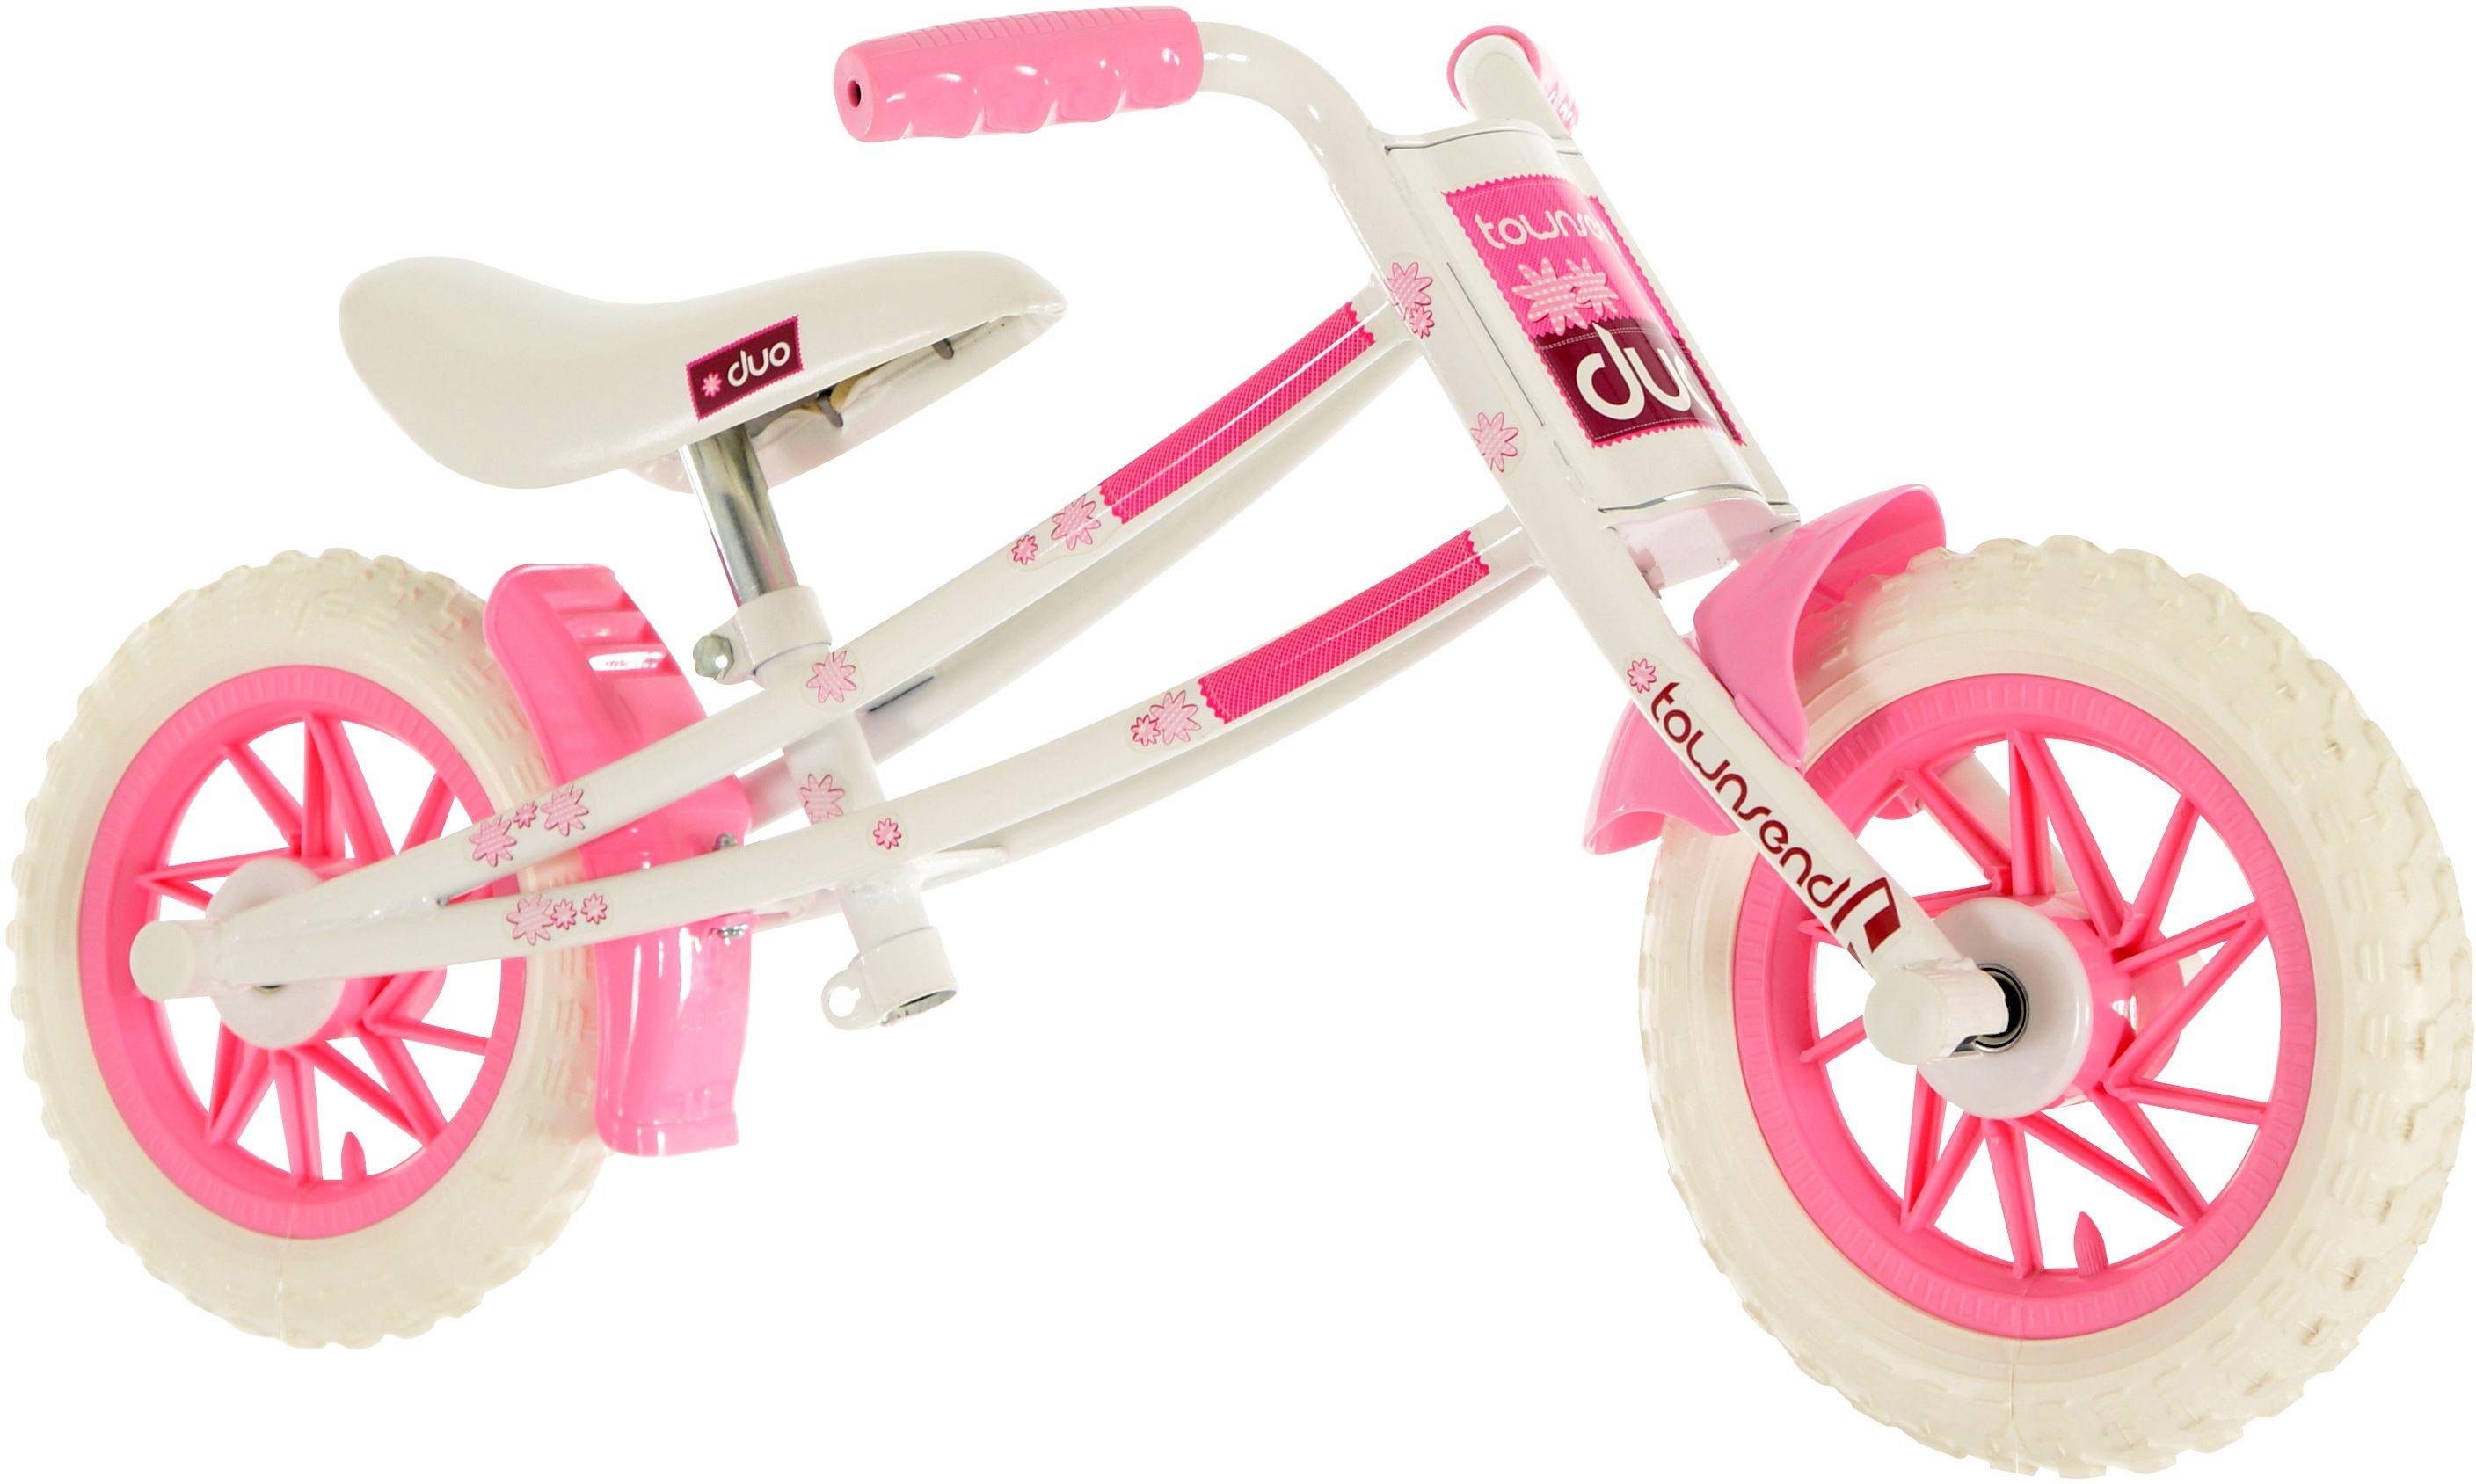 Townsend Duo Pink 10 inch Wheel Size Kids Balance Bike